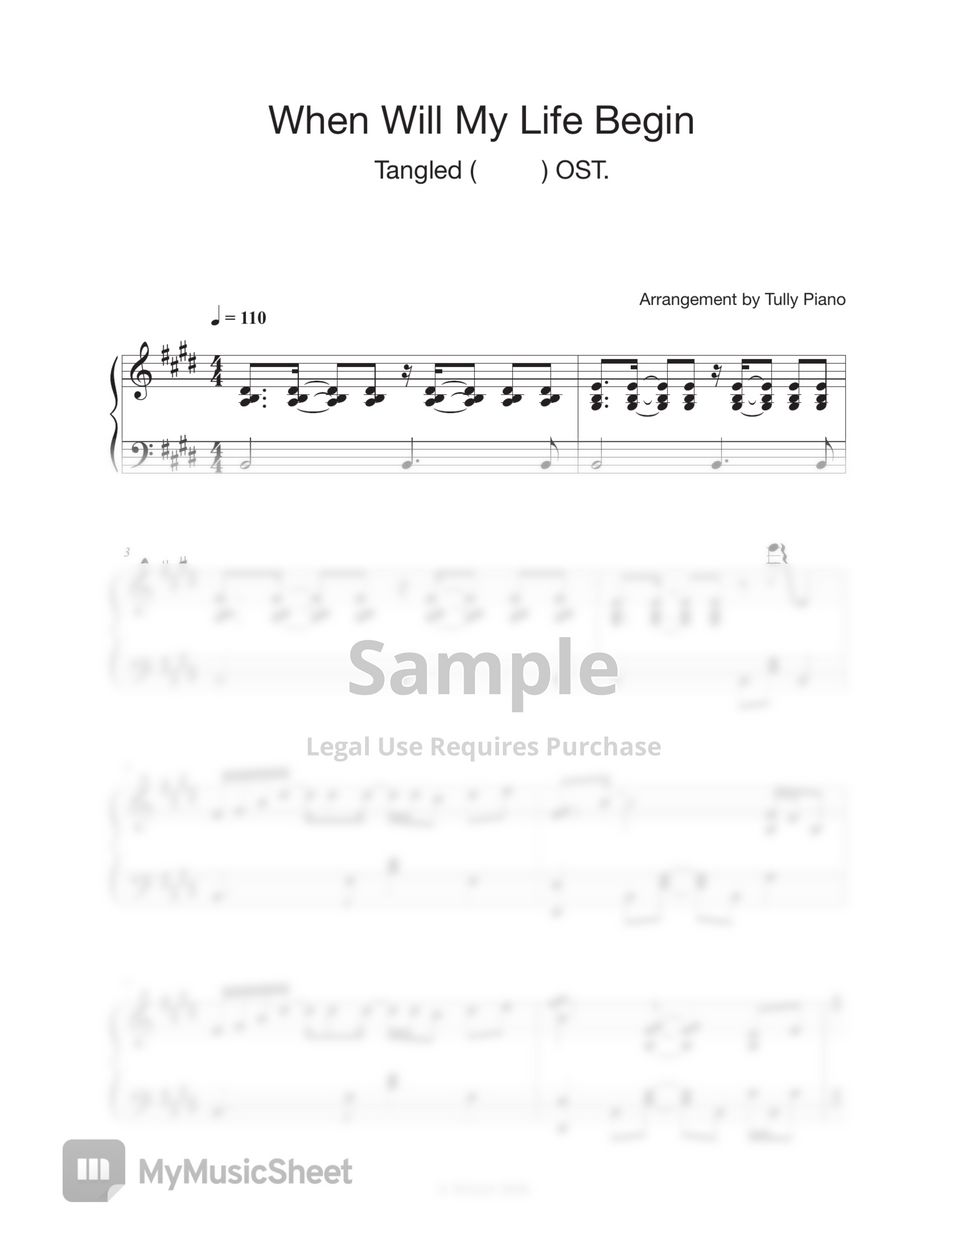 Tangled OST - When Will My Life Begin (E Major&F Major) by Tully Piano